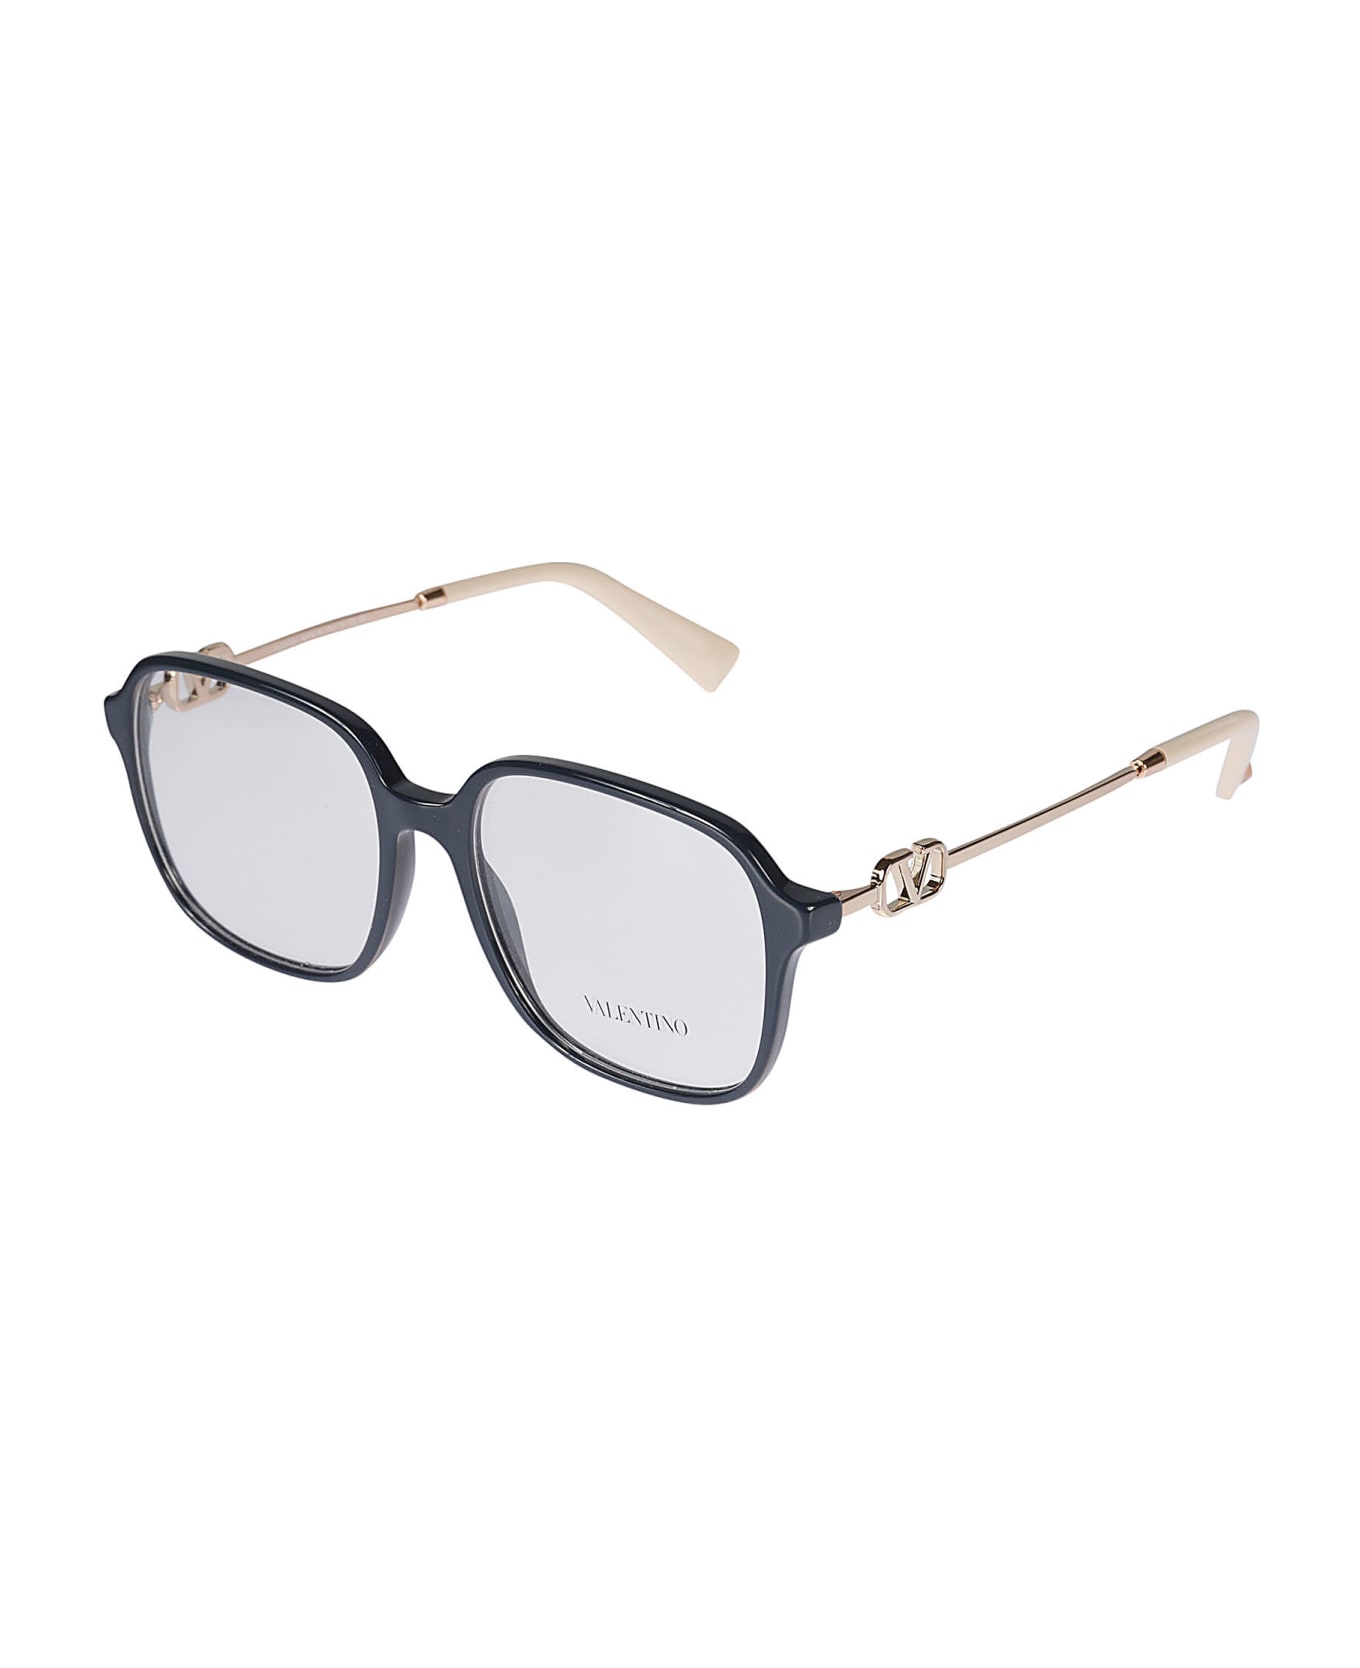 Valentino Eyewear Logo Sided Square Framed Glasses - 5034